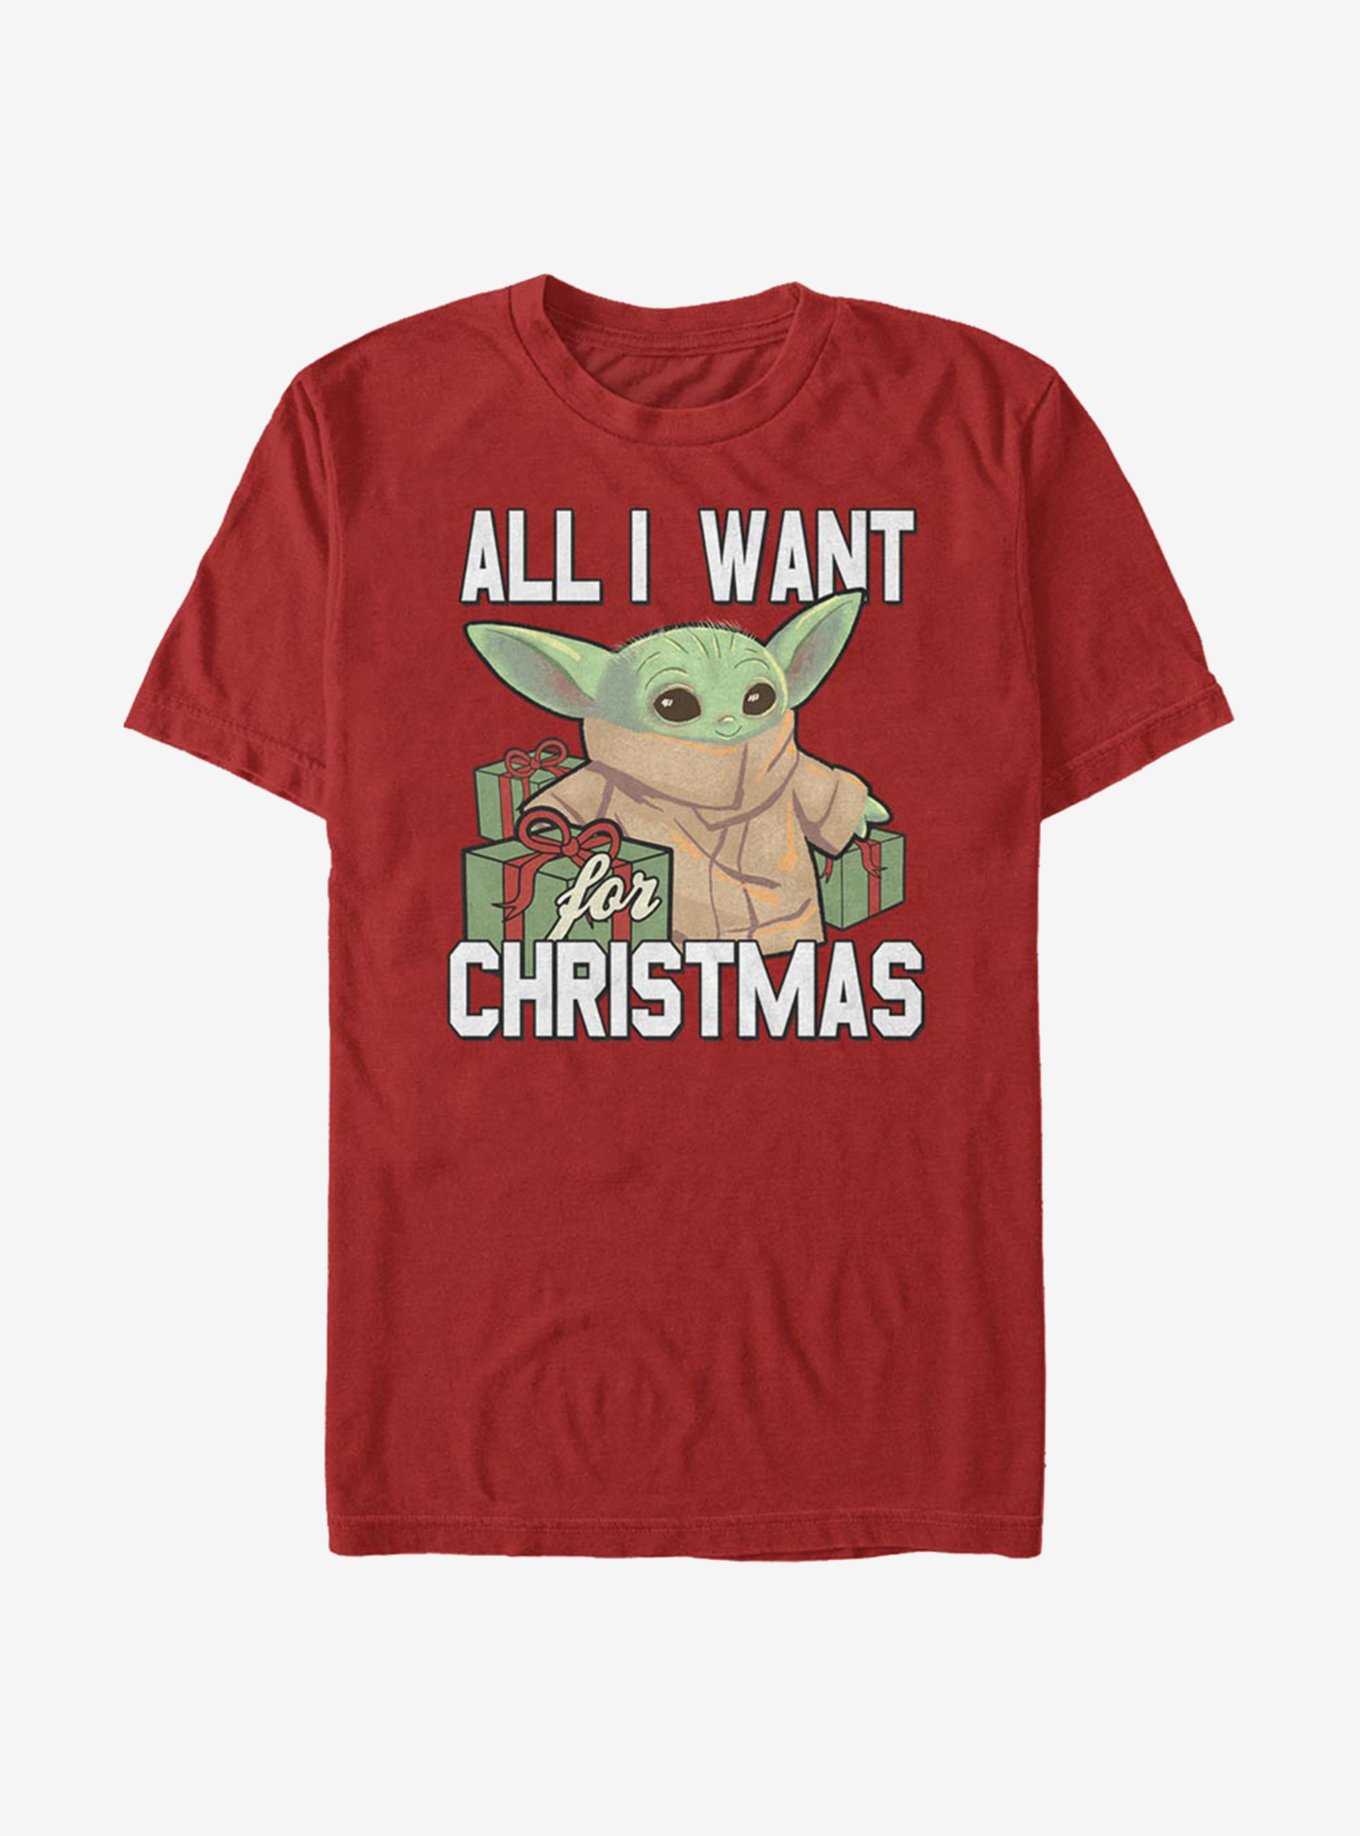 Star Wars The Mandalorian Christmas The Child T-Shirt, , hi-res